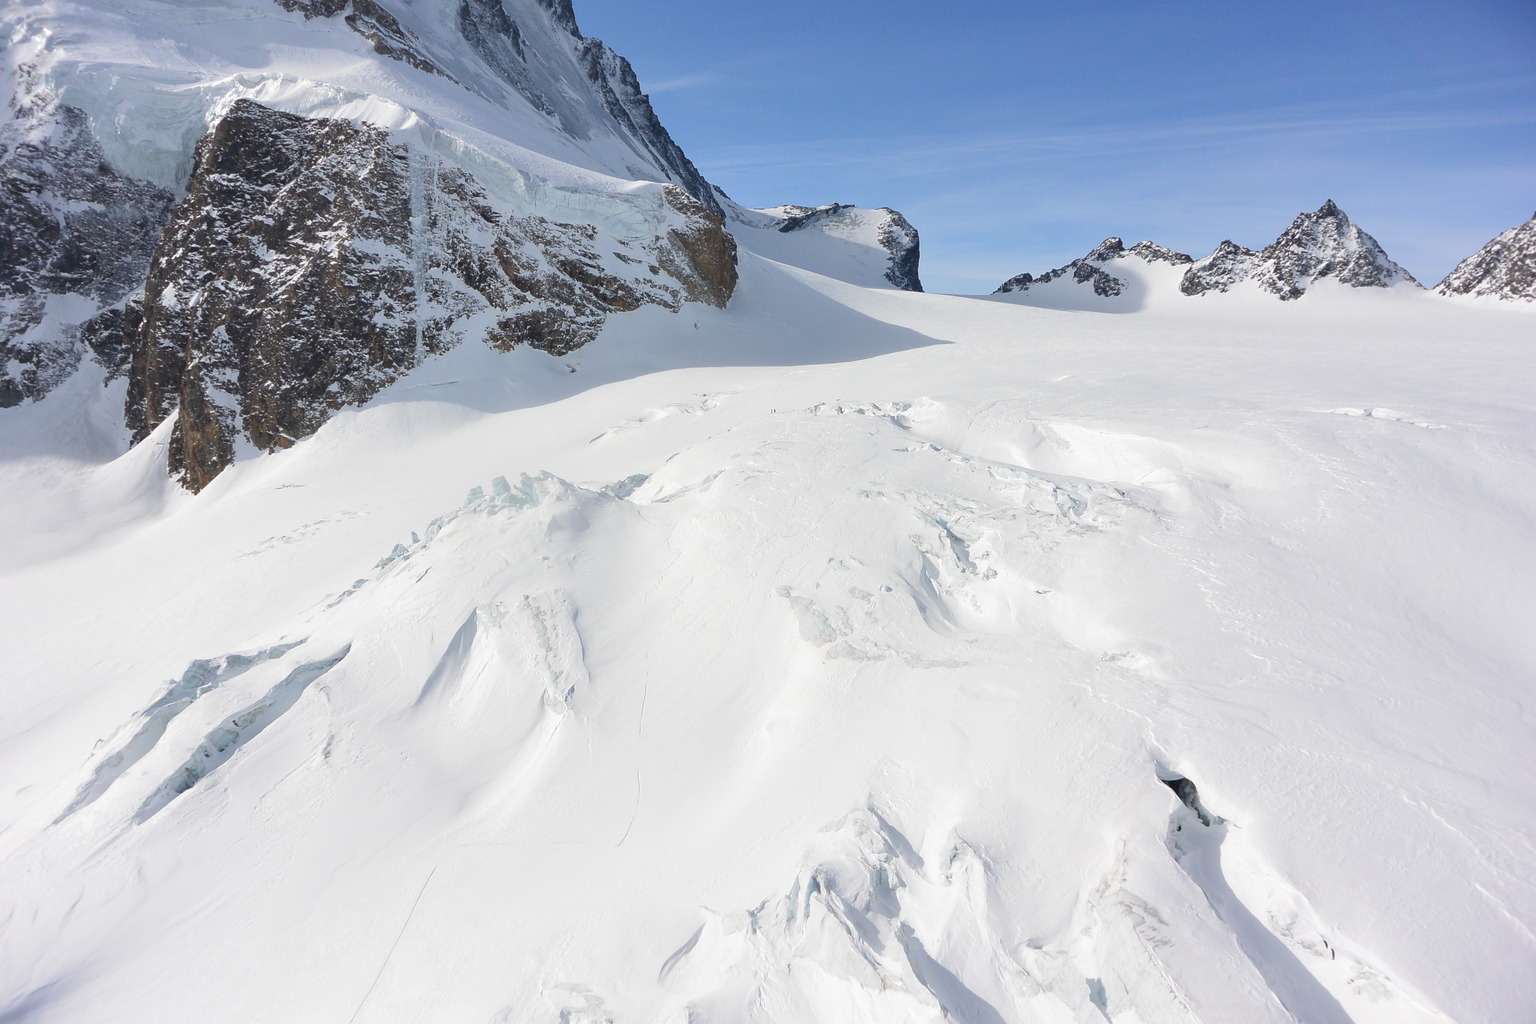 Участок ледника Corbassière, где произошла трагедия 